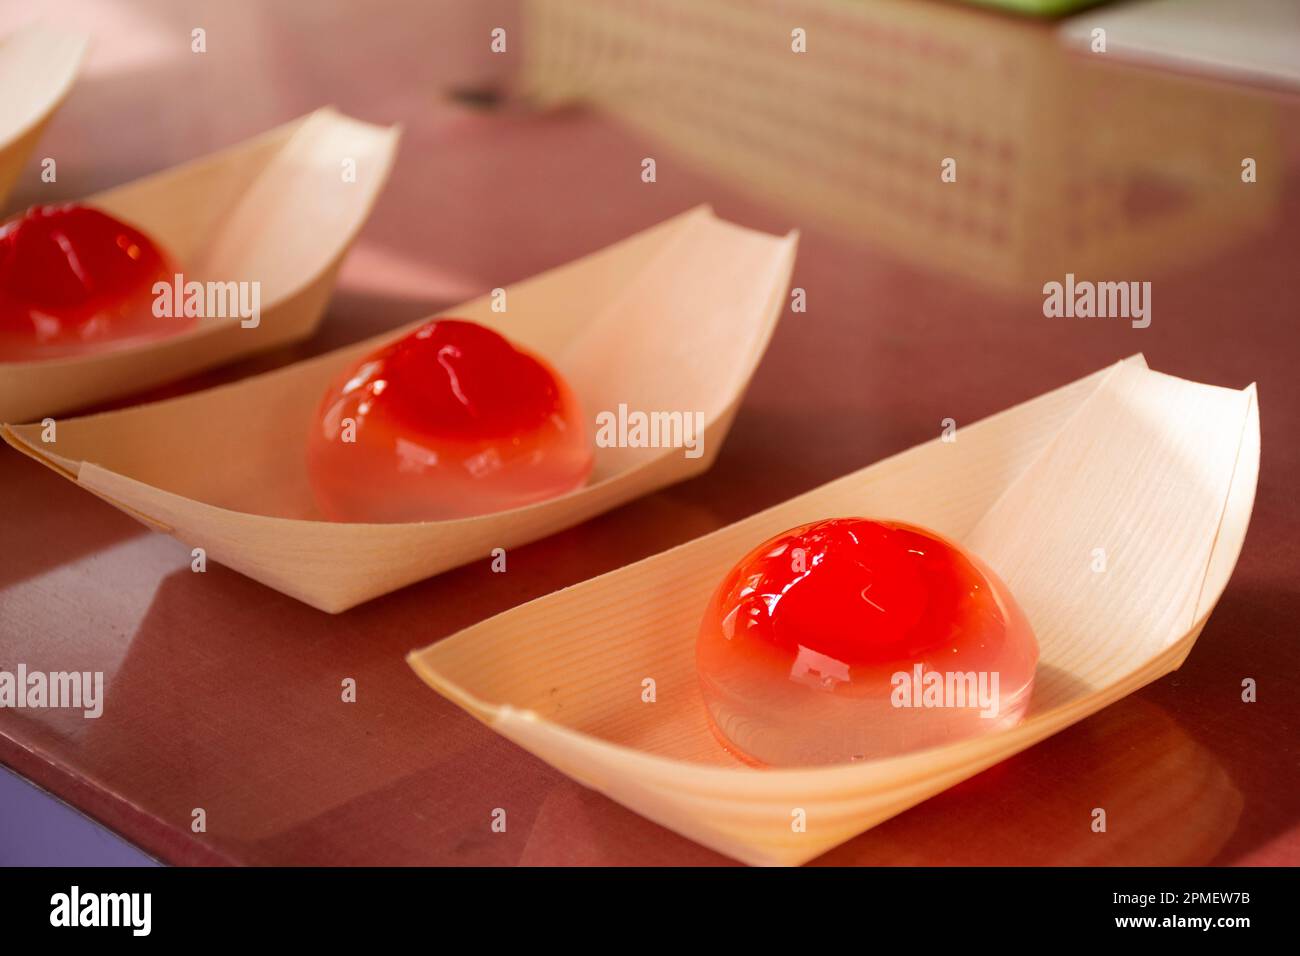 Mizu shingen gelatina trasparente mochi o torta all'acqua raindrop su tazza di foglia di bambù per i viaggiatori coreani acquistare mangiare nel locale negozio caffè a Gamcheon cultu Foto Stock